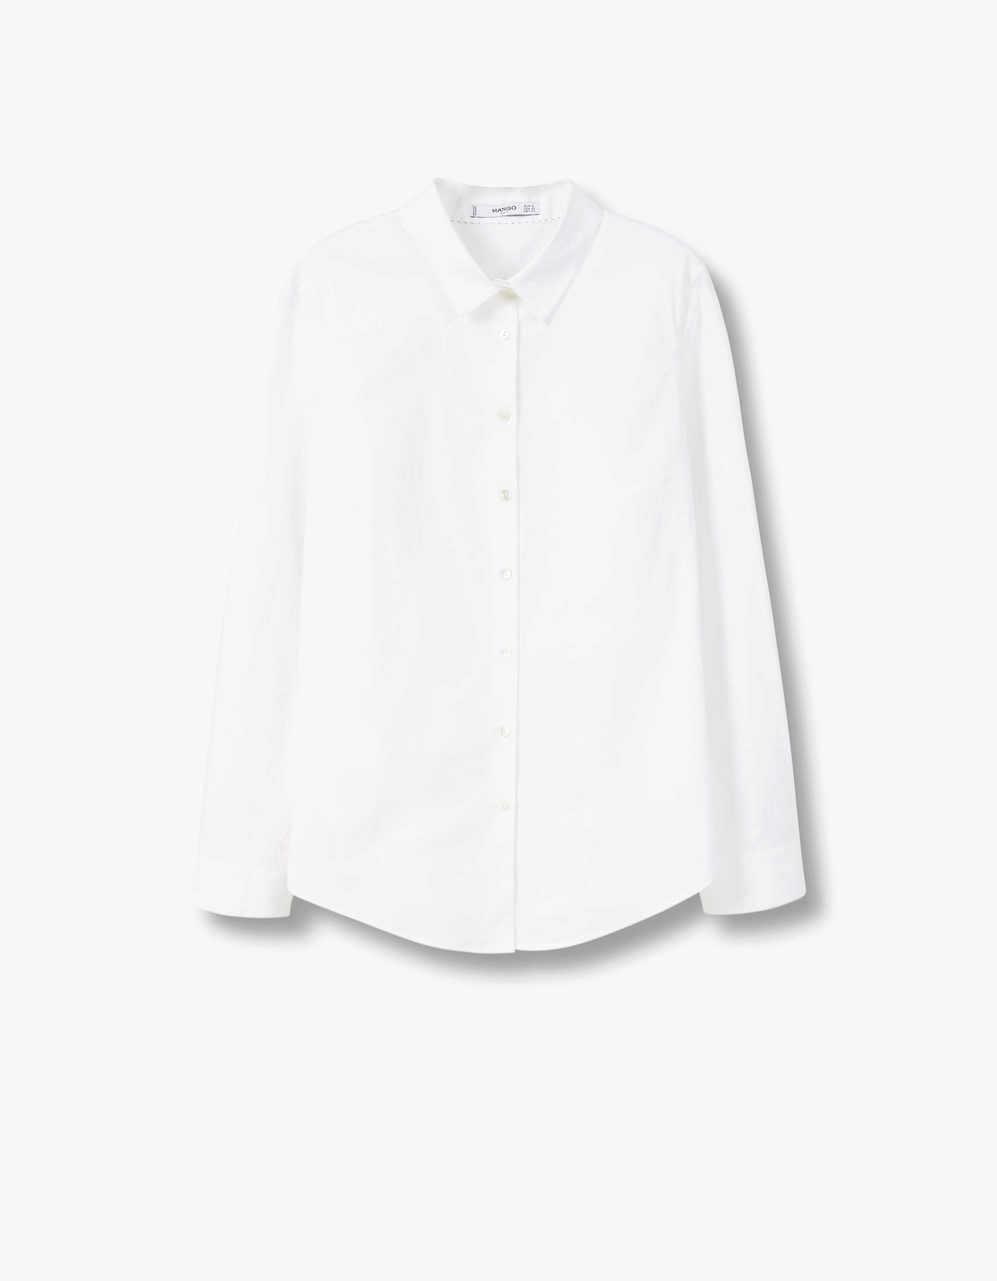 Camisa bsica blanca. De Mango, 19,99 euros.